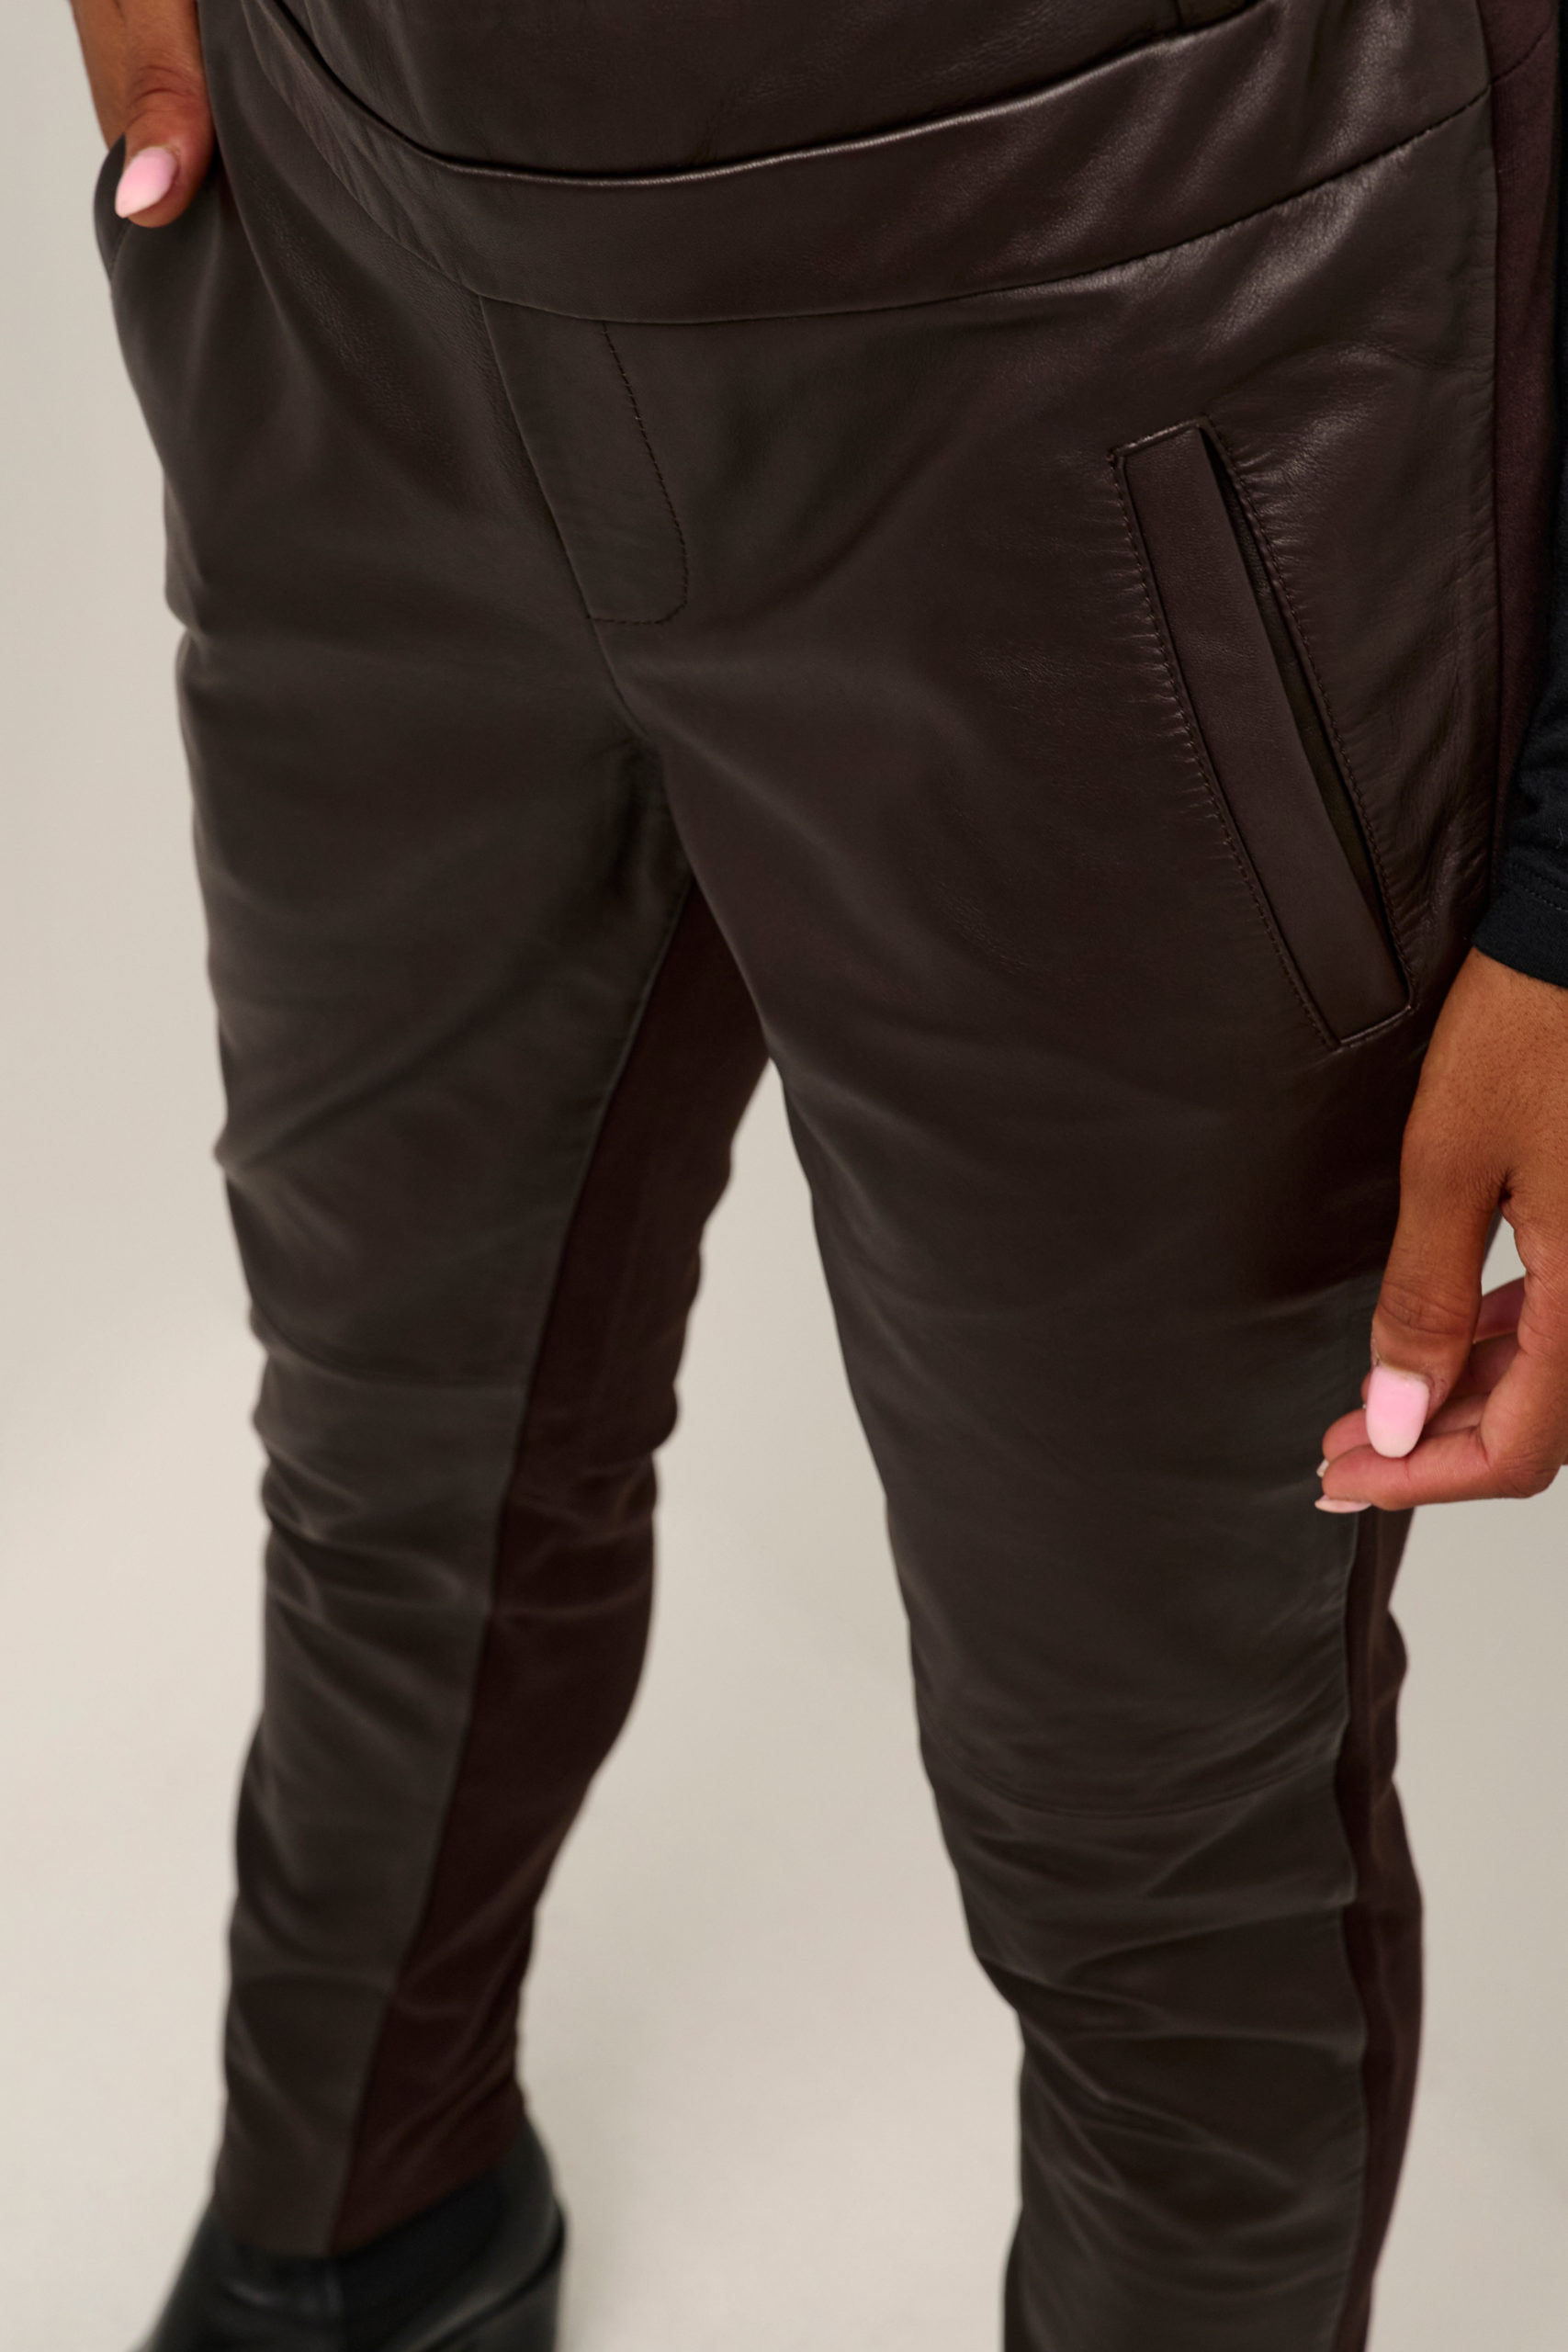 Kagia Sofie Leather Pant java closeup